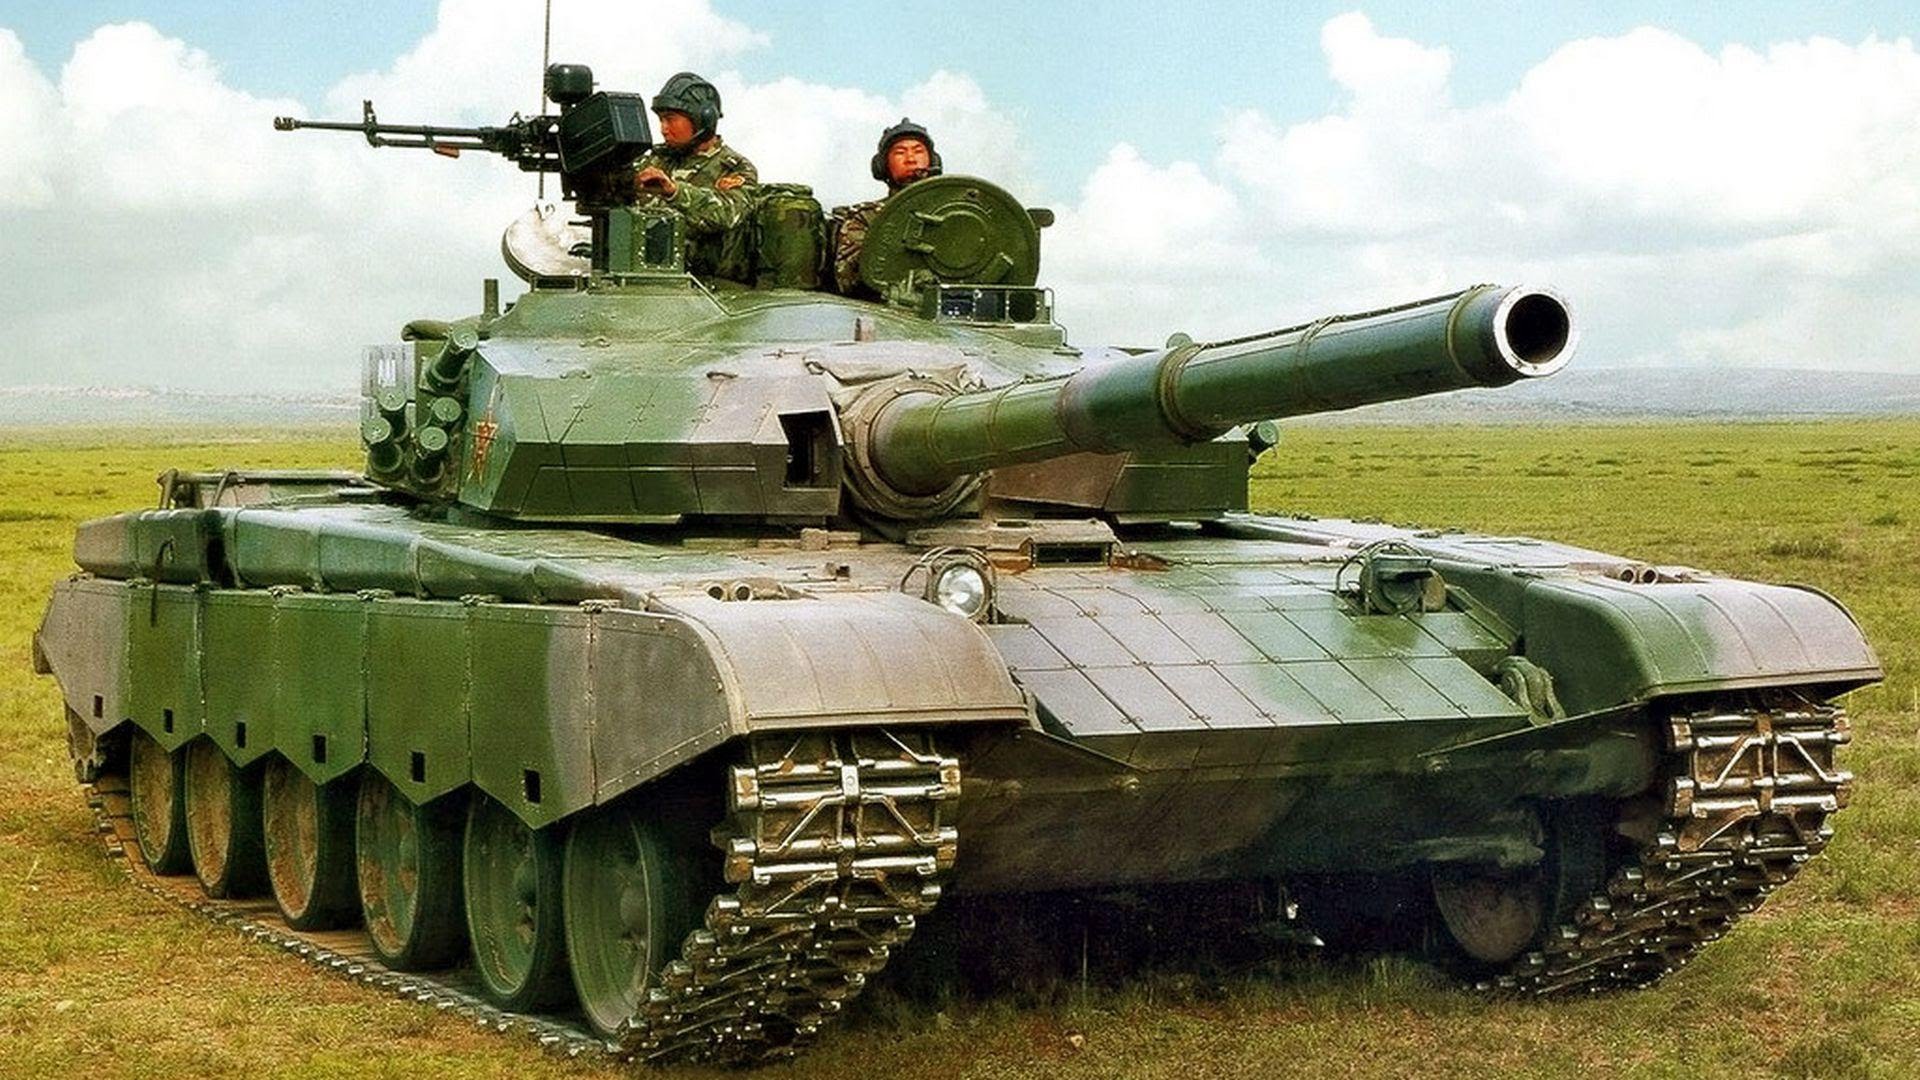 Ztz 99. Type 99 танк. Китайский танк тайп 99. Танк ZTZ-99a. Type 99 MBT.